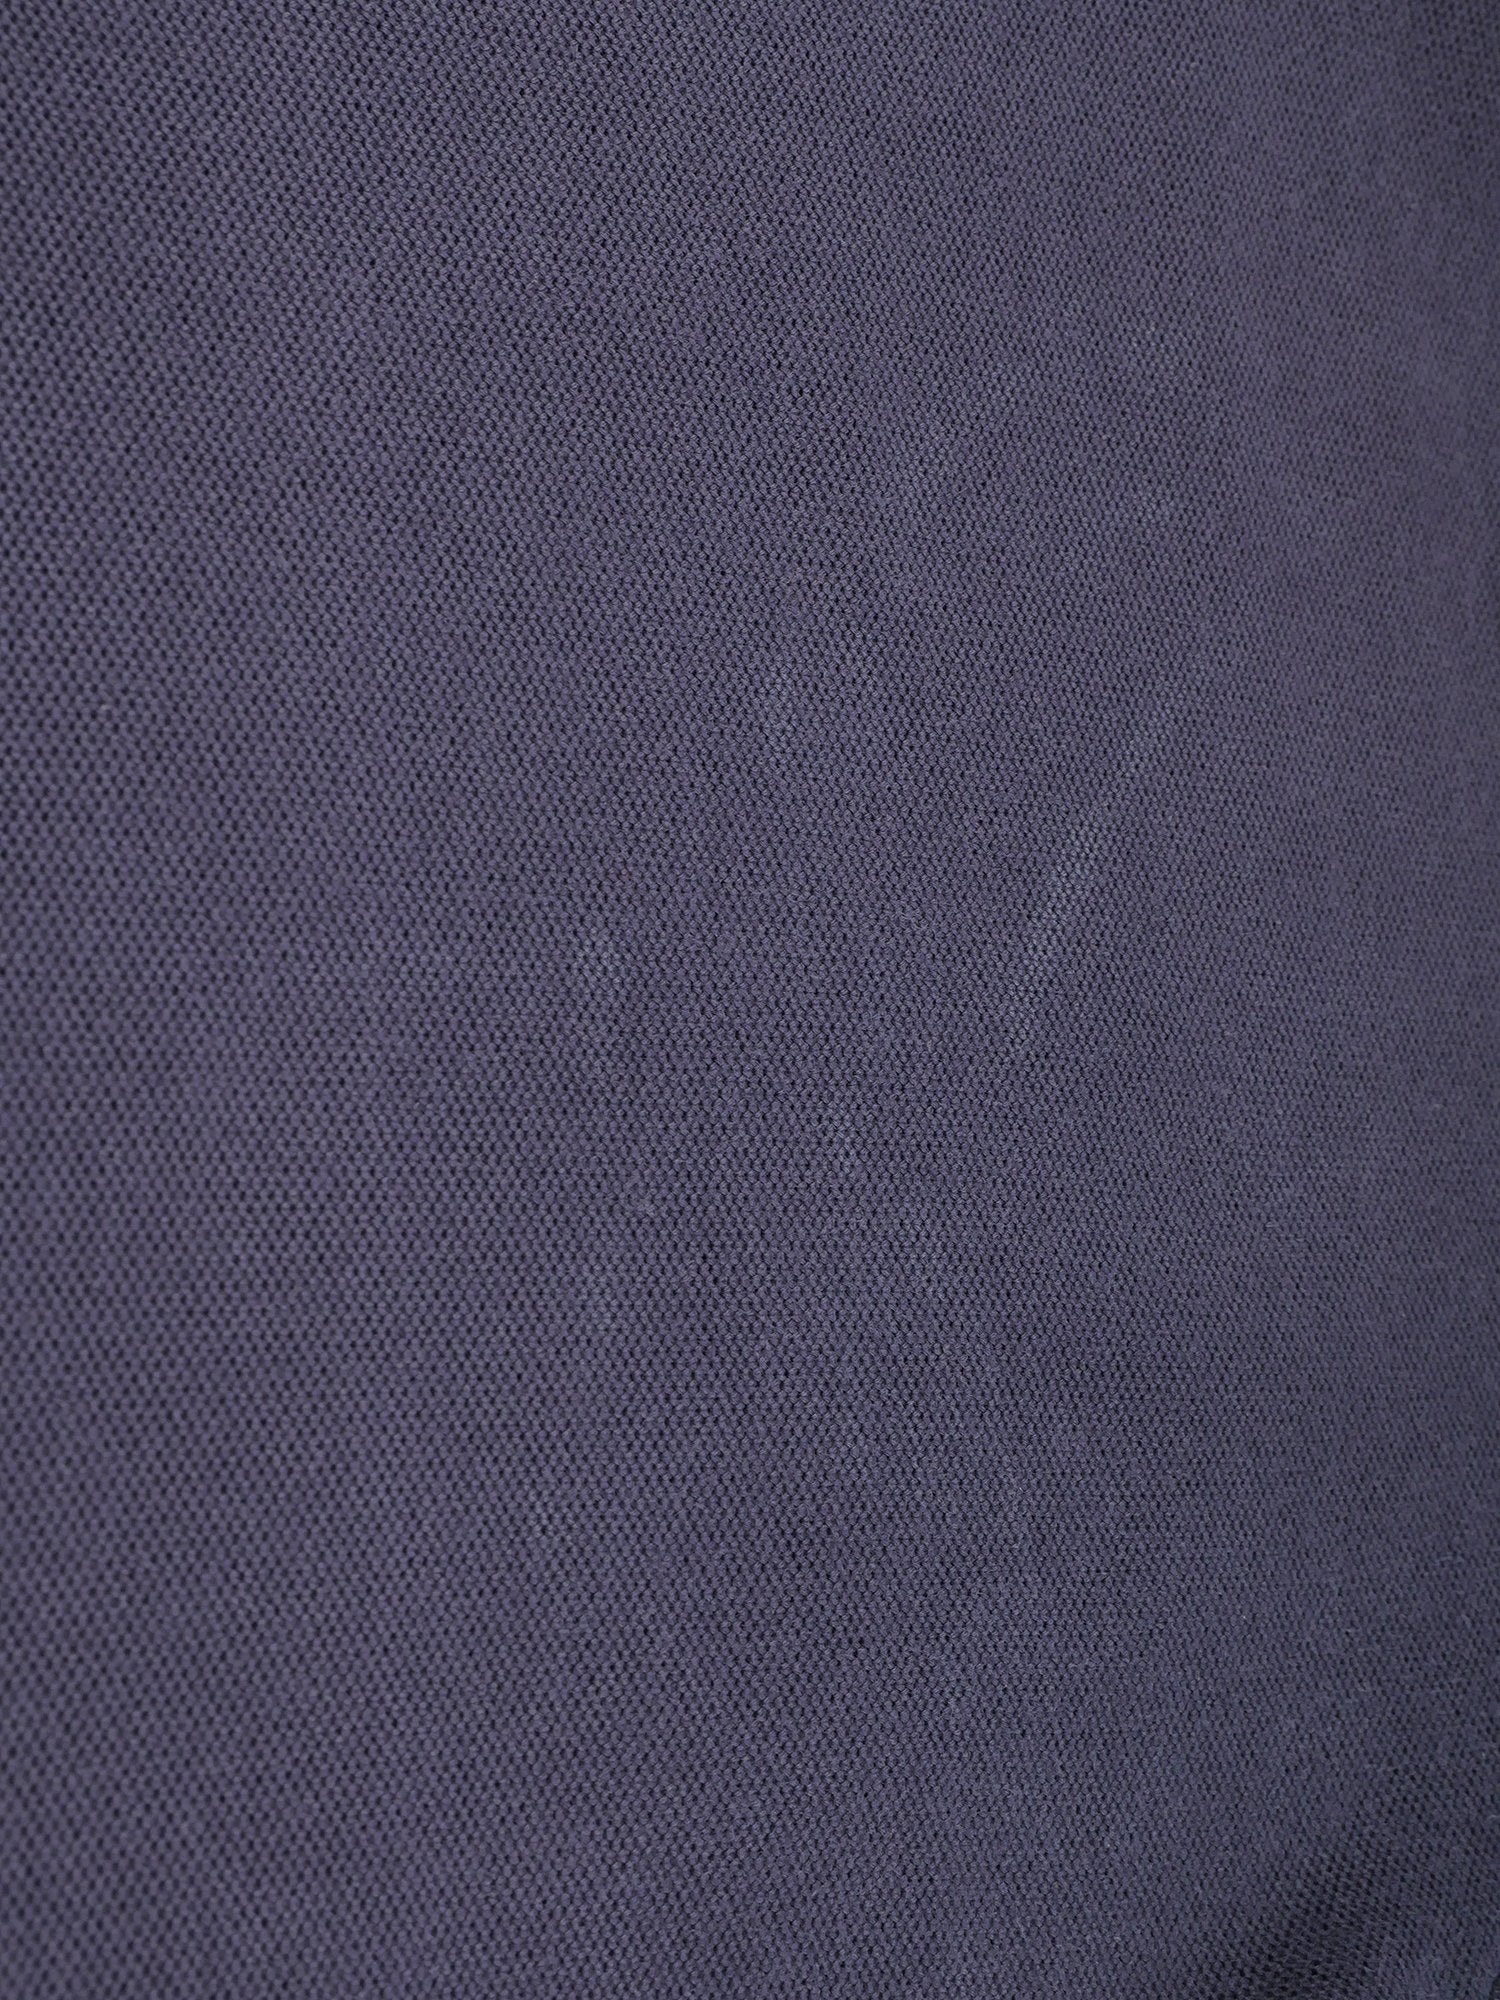 Fila blau Polo Shirt - Peeces